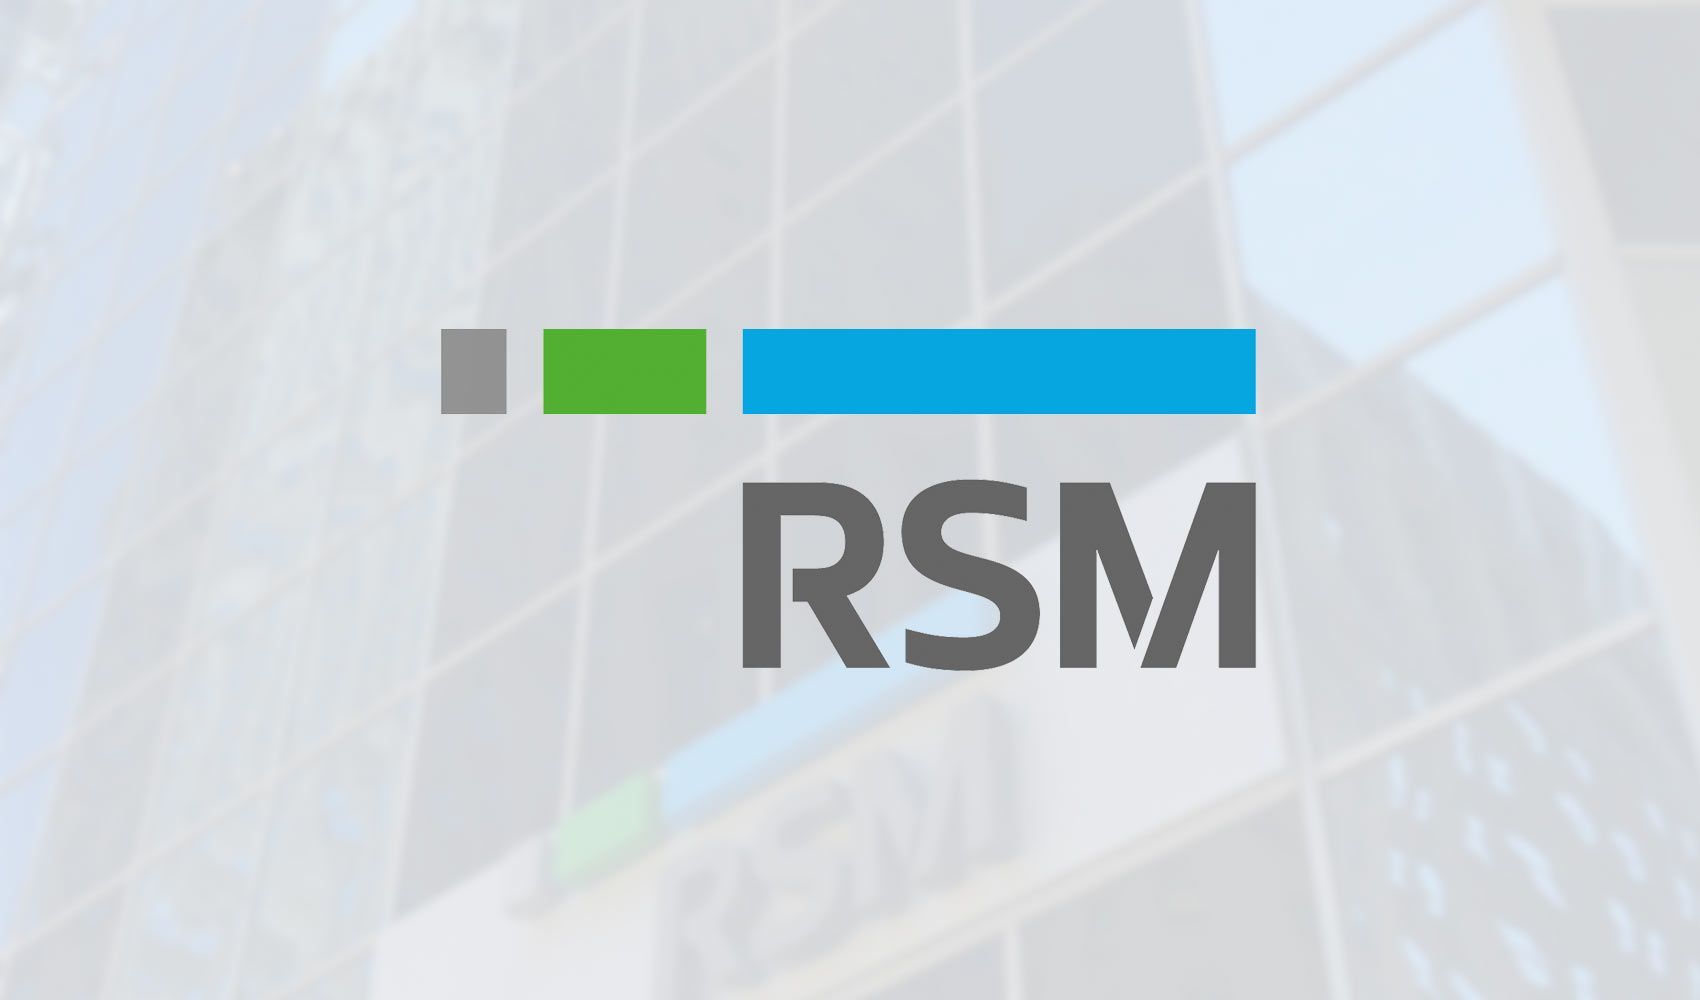 RSM logo image - R_Socialist_Media - ModDB